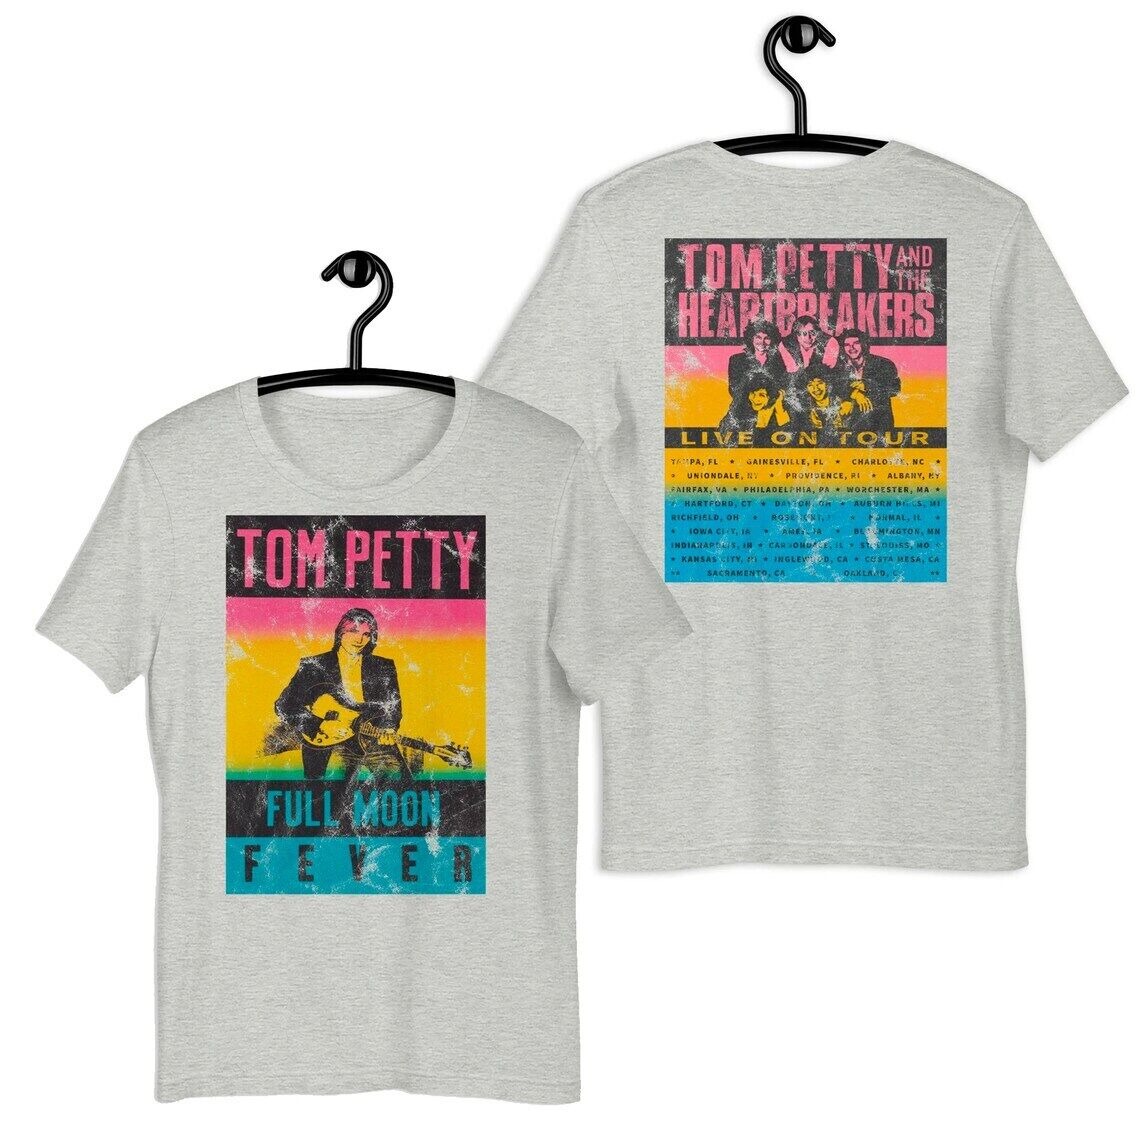 Tom Petty Full Moon Fever Tour T-Shirt Vintage Retro Worn Distressed Thomas Earl